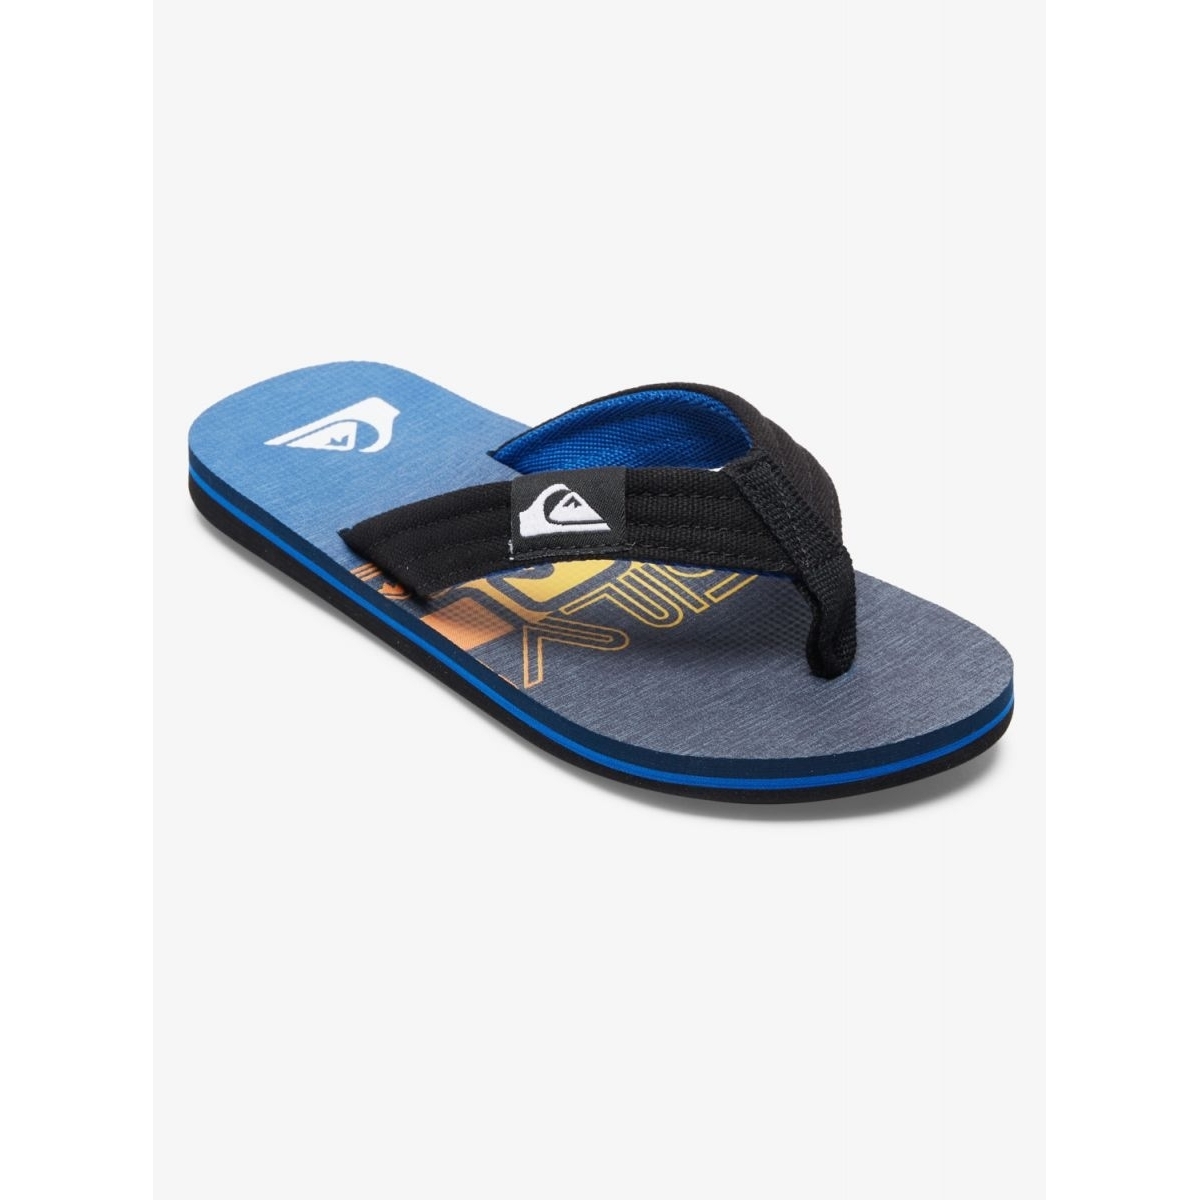 Quiksilver Boys' Molokai Layback Flip Flop Sandals Blue 6 - AQBL100591-BYJ6 BLUE 6 - BLUE 6, 2 Little Kid